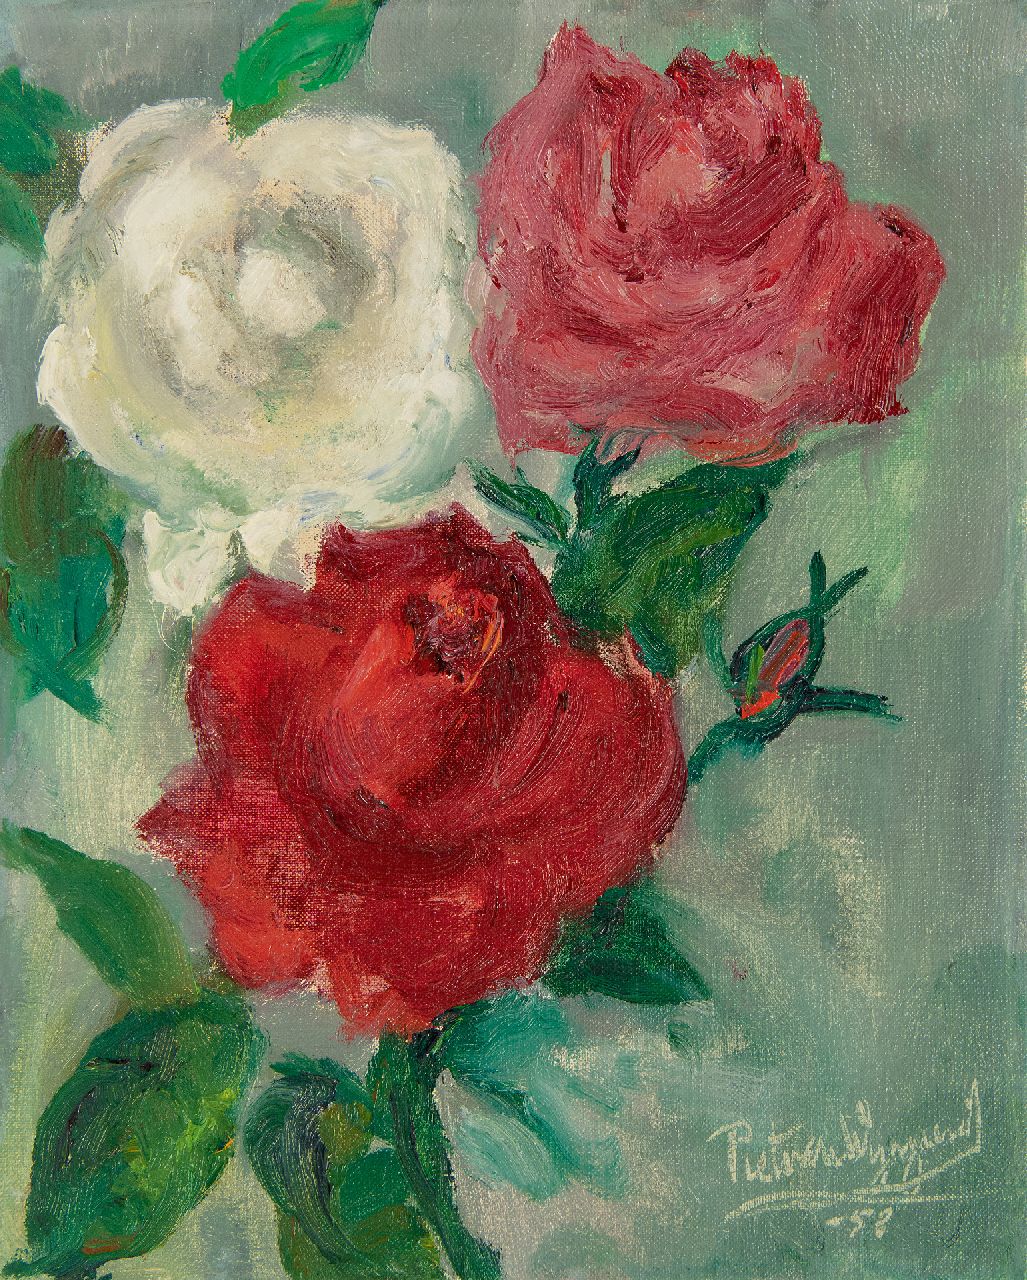 Wijngaerdt P.T. van | Petrus Theodorus 'Piet' van Wijngaerdt | Paintings offered for sale | Roses, oil on canvas 28.0 x 22.0 cm, signed l.r. and dated '53